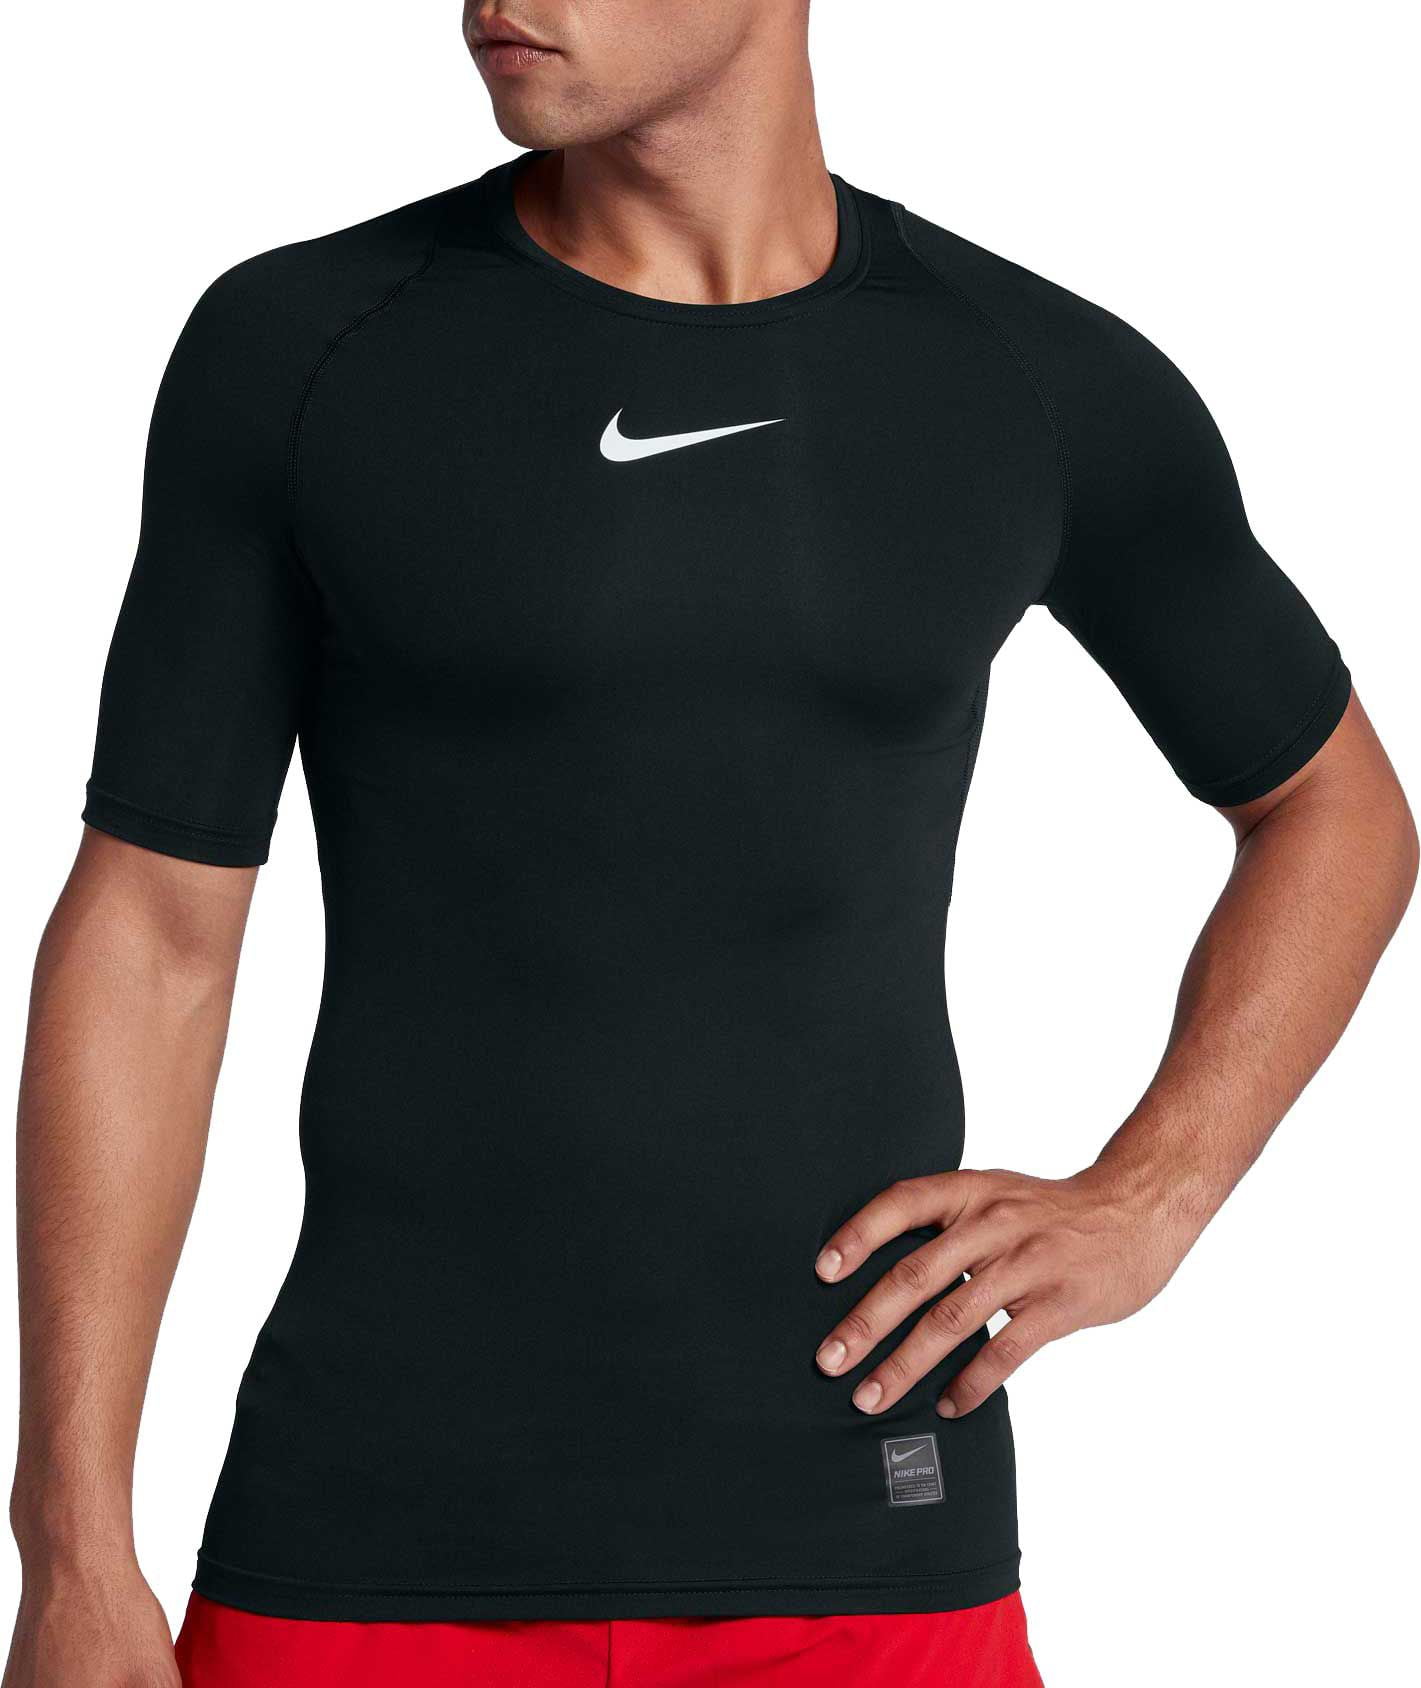 Nike Pro Compression Shirts.